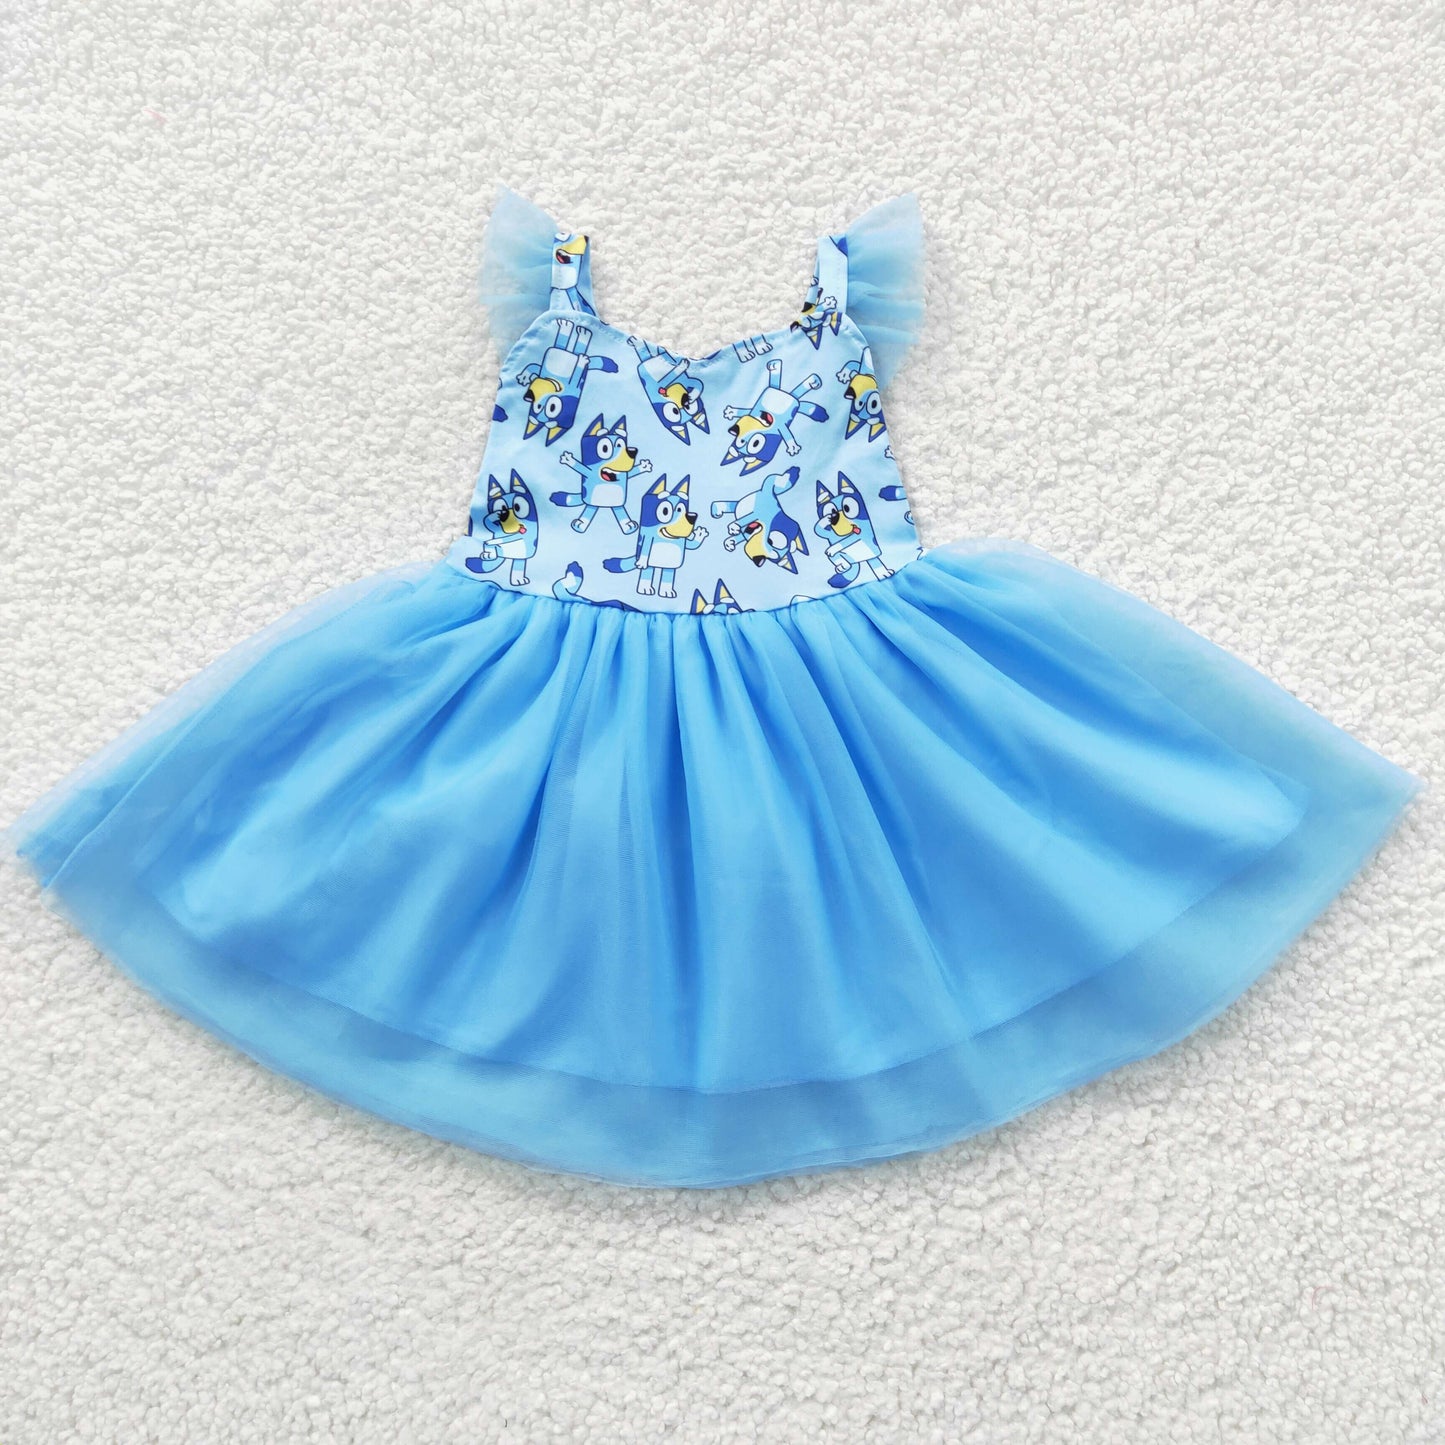 Baby girls short sleeve blue dog cartoon tulle dress